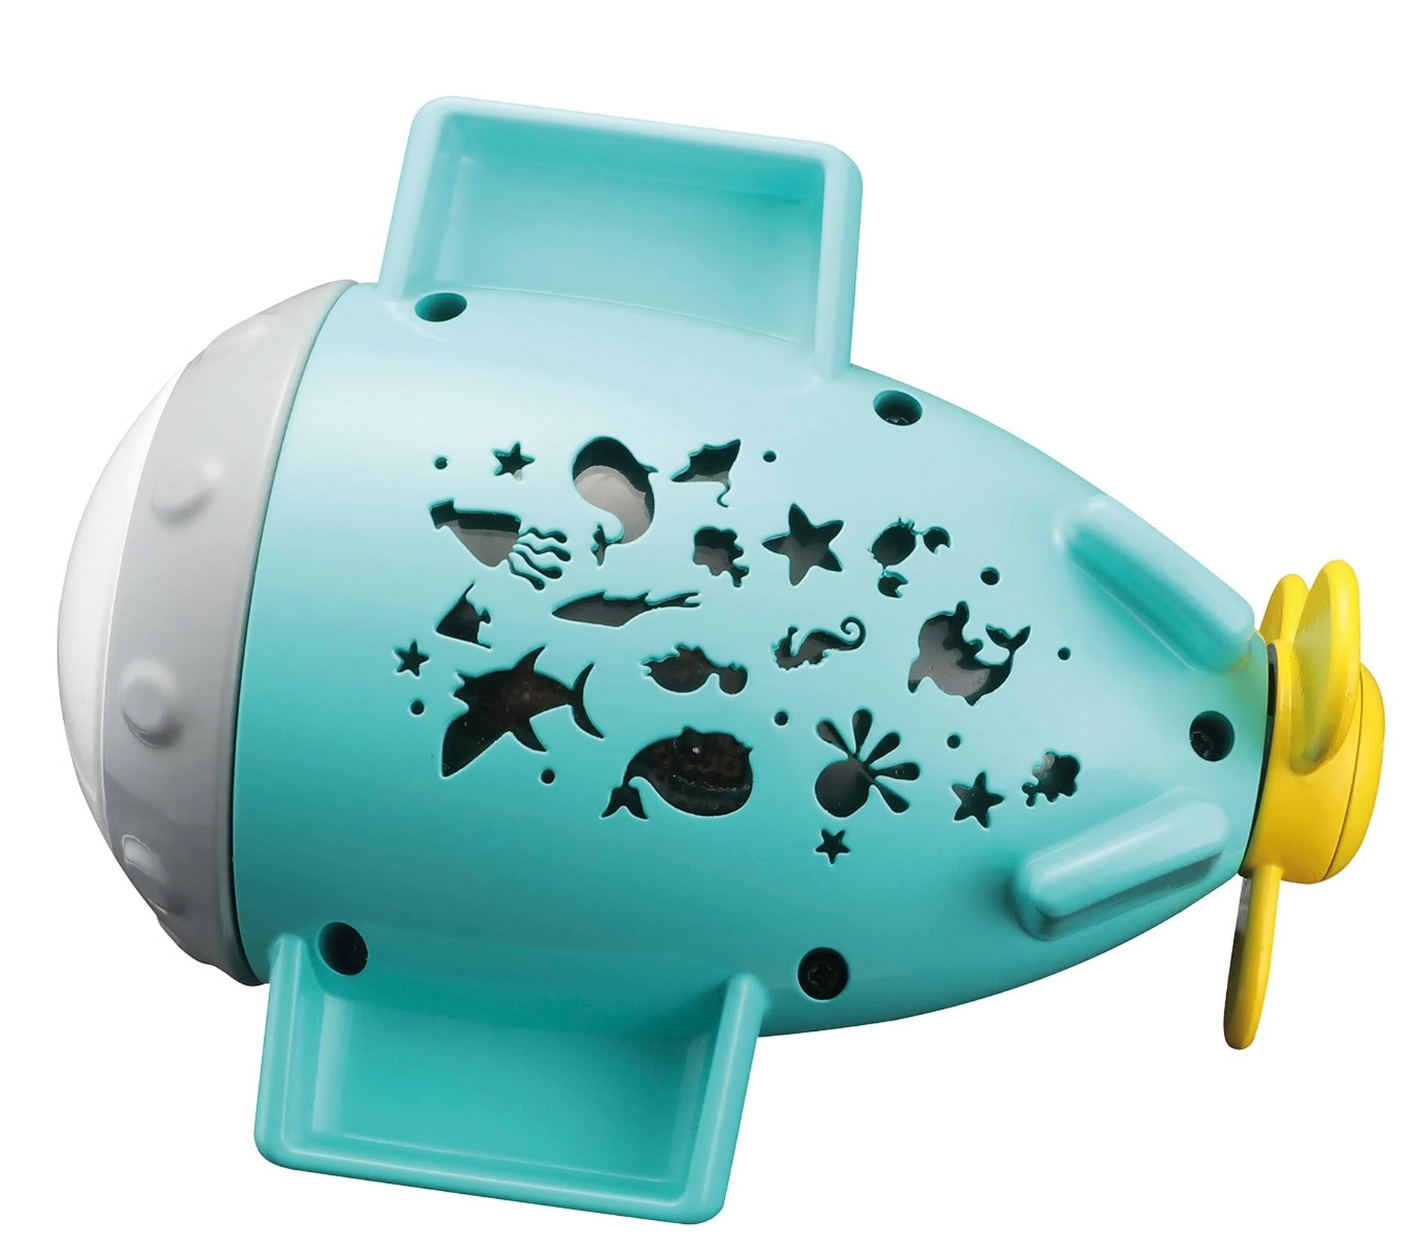 Splash and Play Submarine Projector